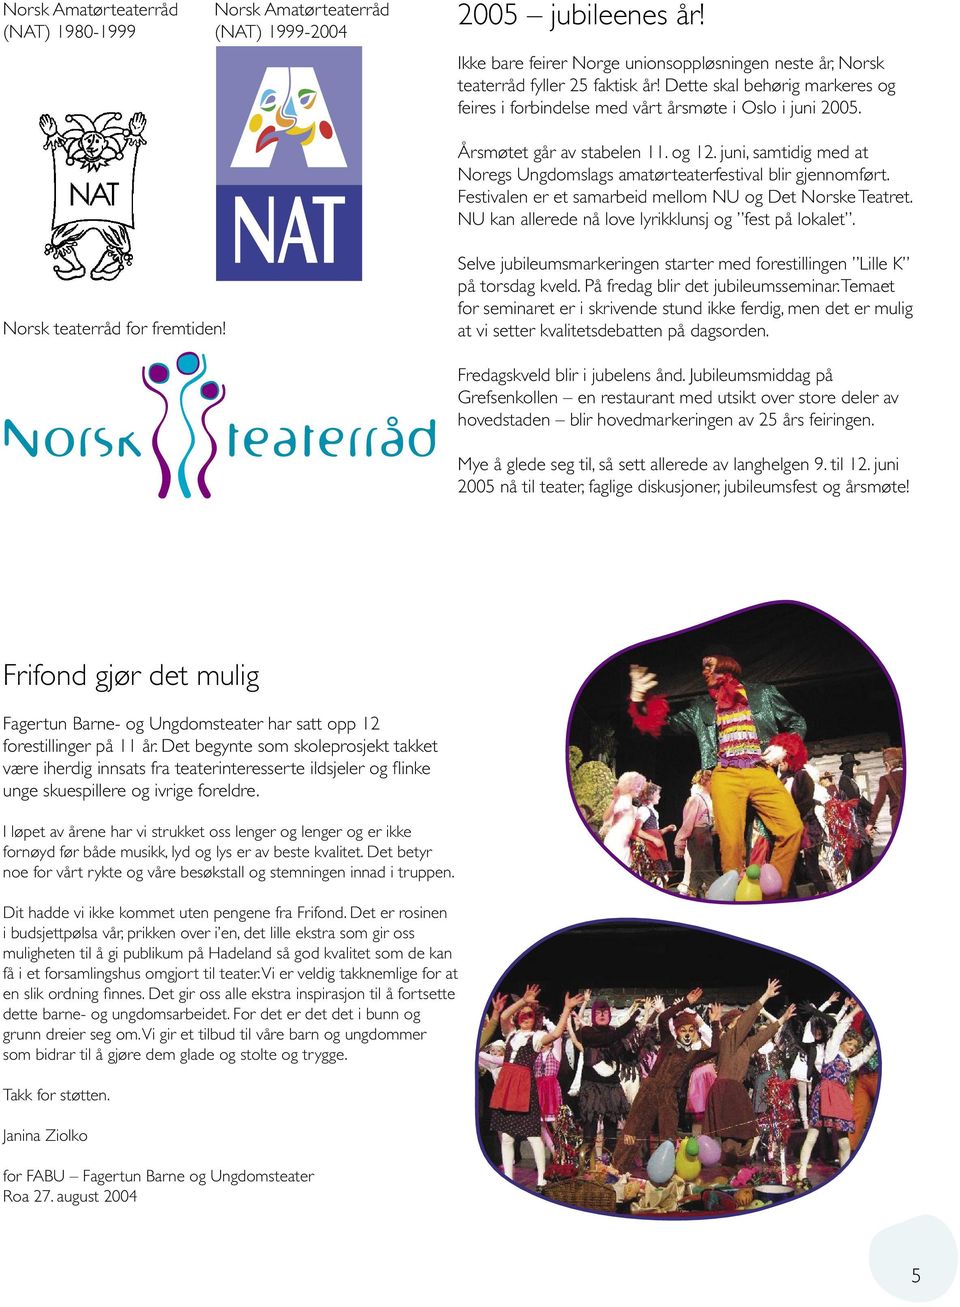 juni, samtidig med at Noregs Ungdomslags amatørteaterfestival blir gjennomført. Festivalen er et samarbeid mellom NU og Det Norske Teatret. NU kan allerede nå love lyrikklunsj og fest på lokalet.